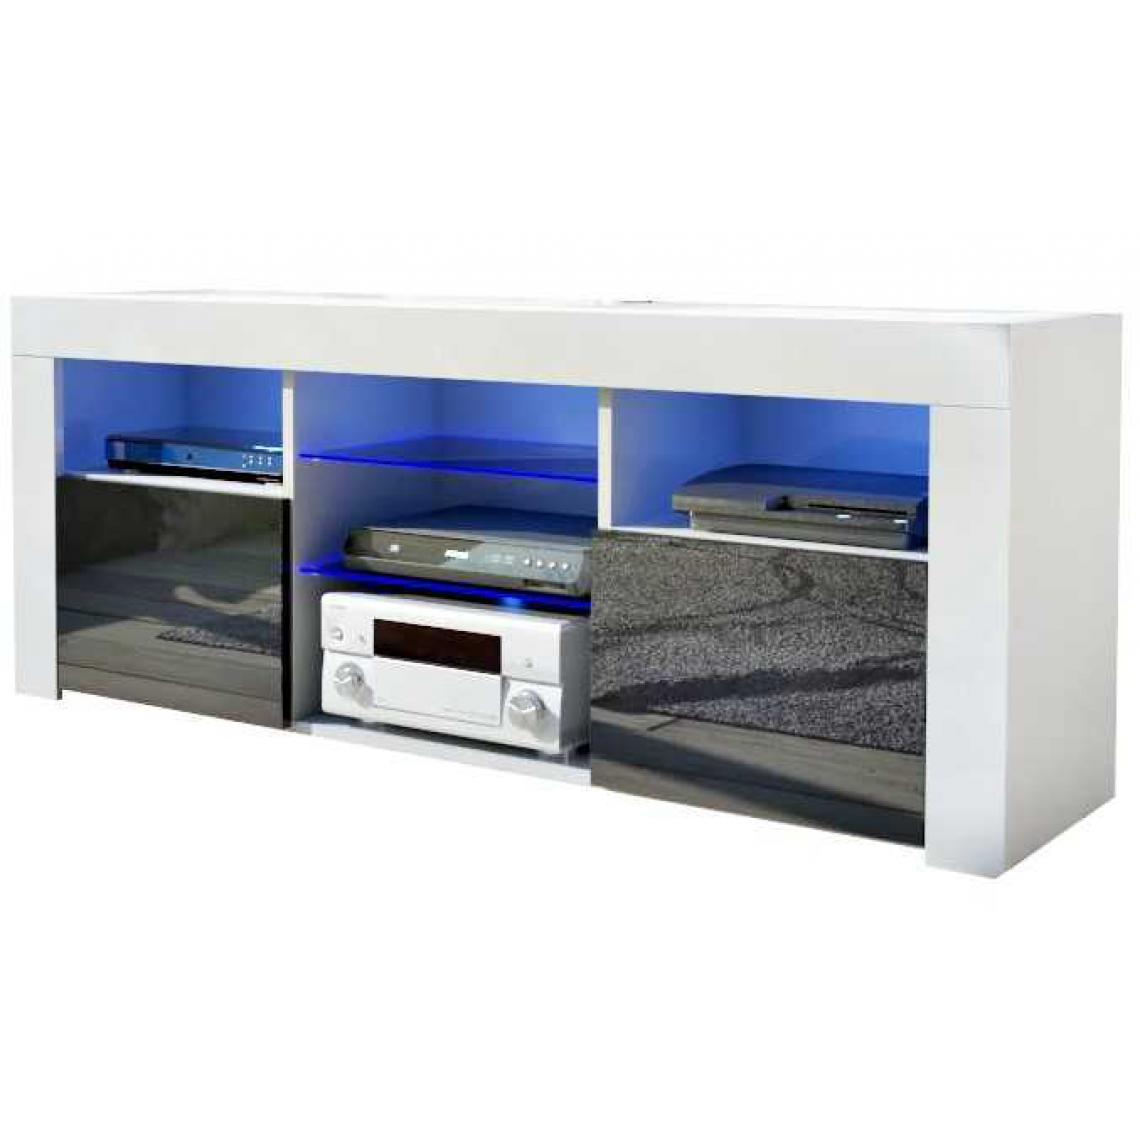 Mpc - Meublet v blanc mat noir brillant + led rgb /145 x 55 x 35 cm - Meubles TV, Hi-Fi